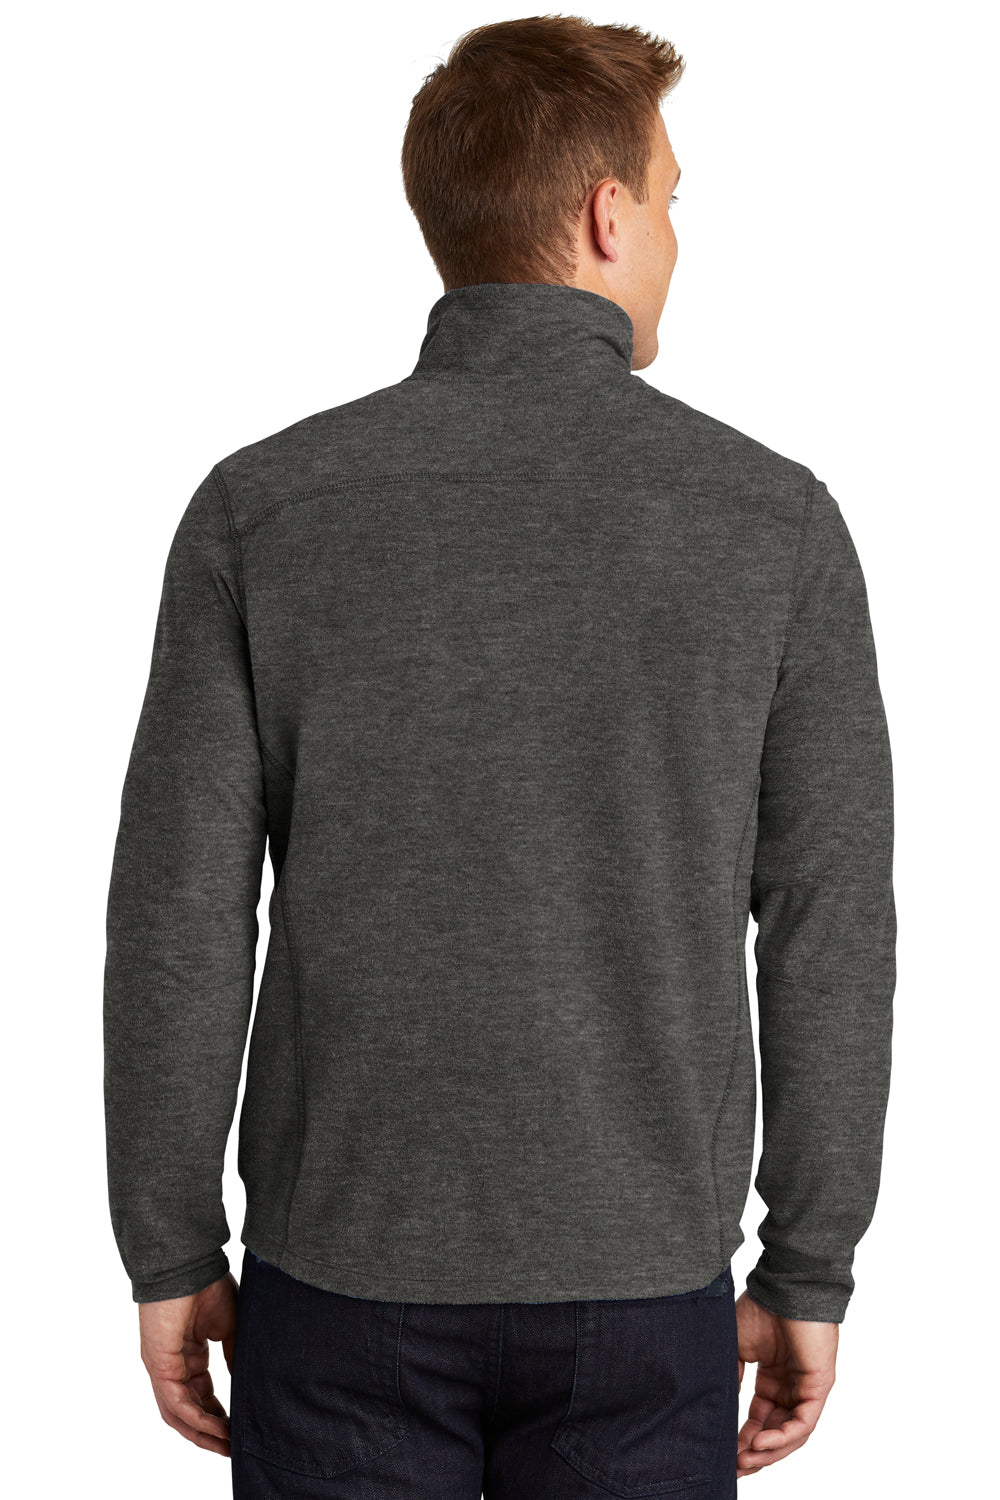 Port Authority F234 Mens Heather Microfleece 1/4 Zip Sweatshirt Charcoal Black Back